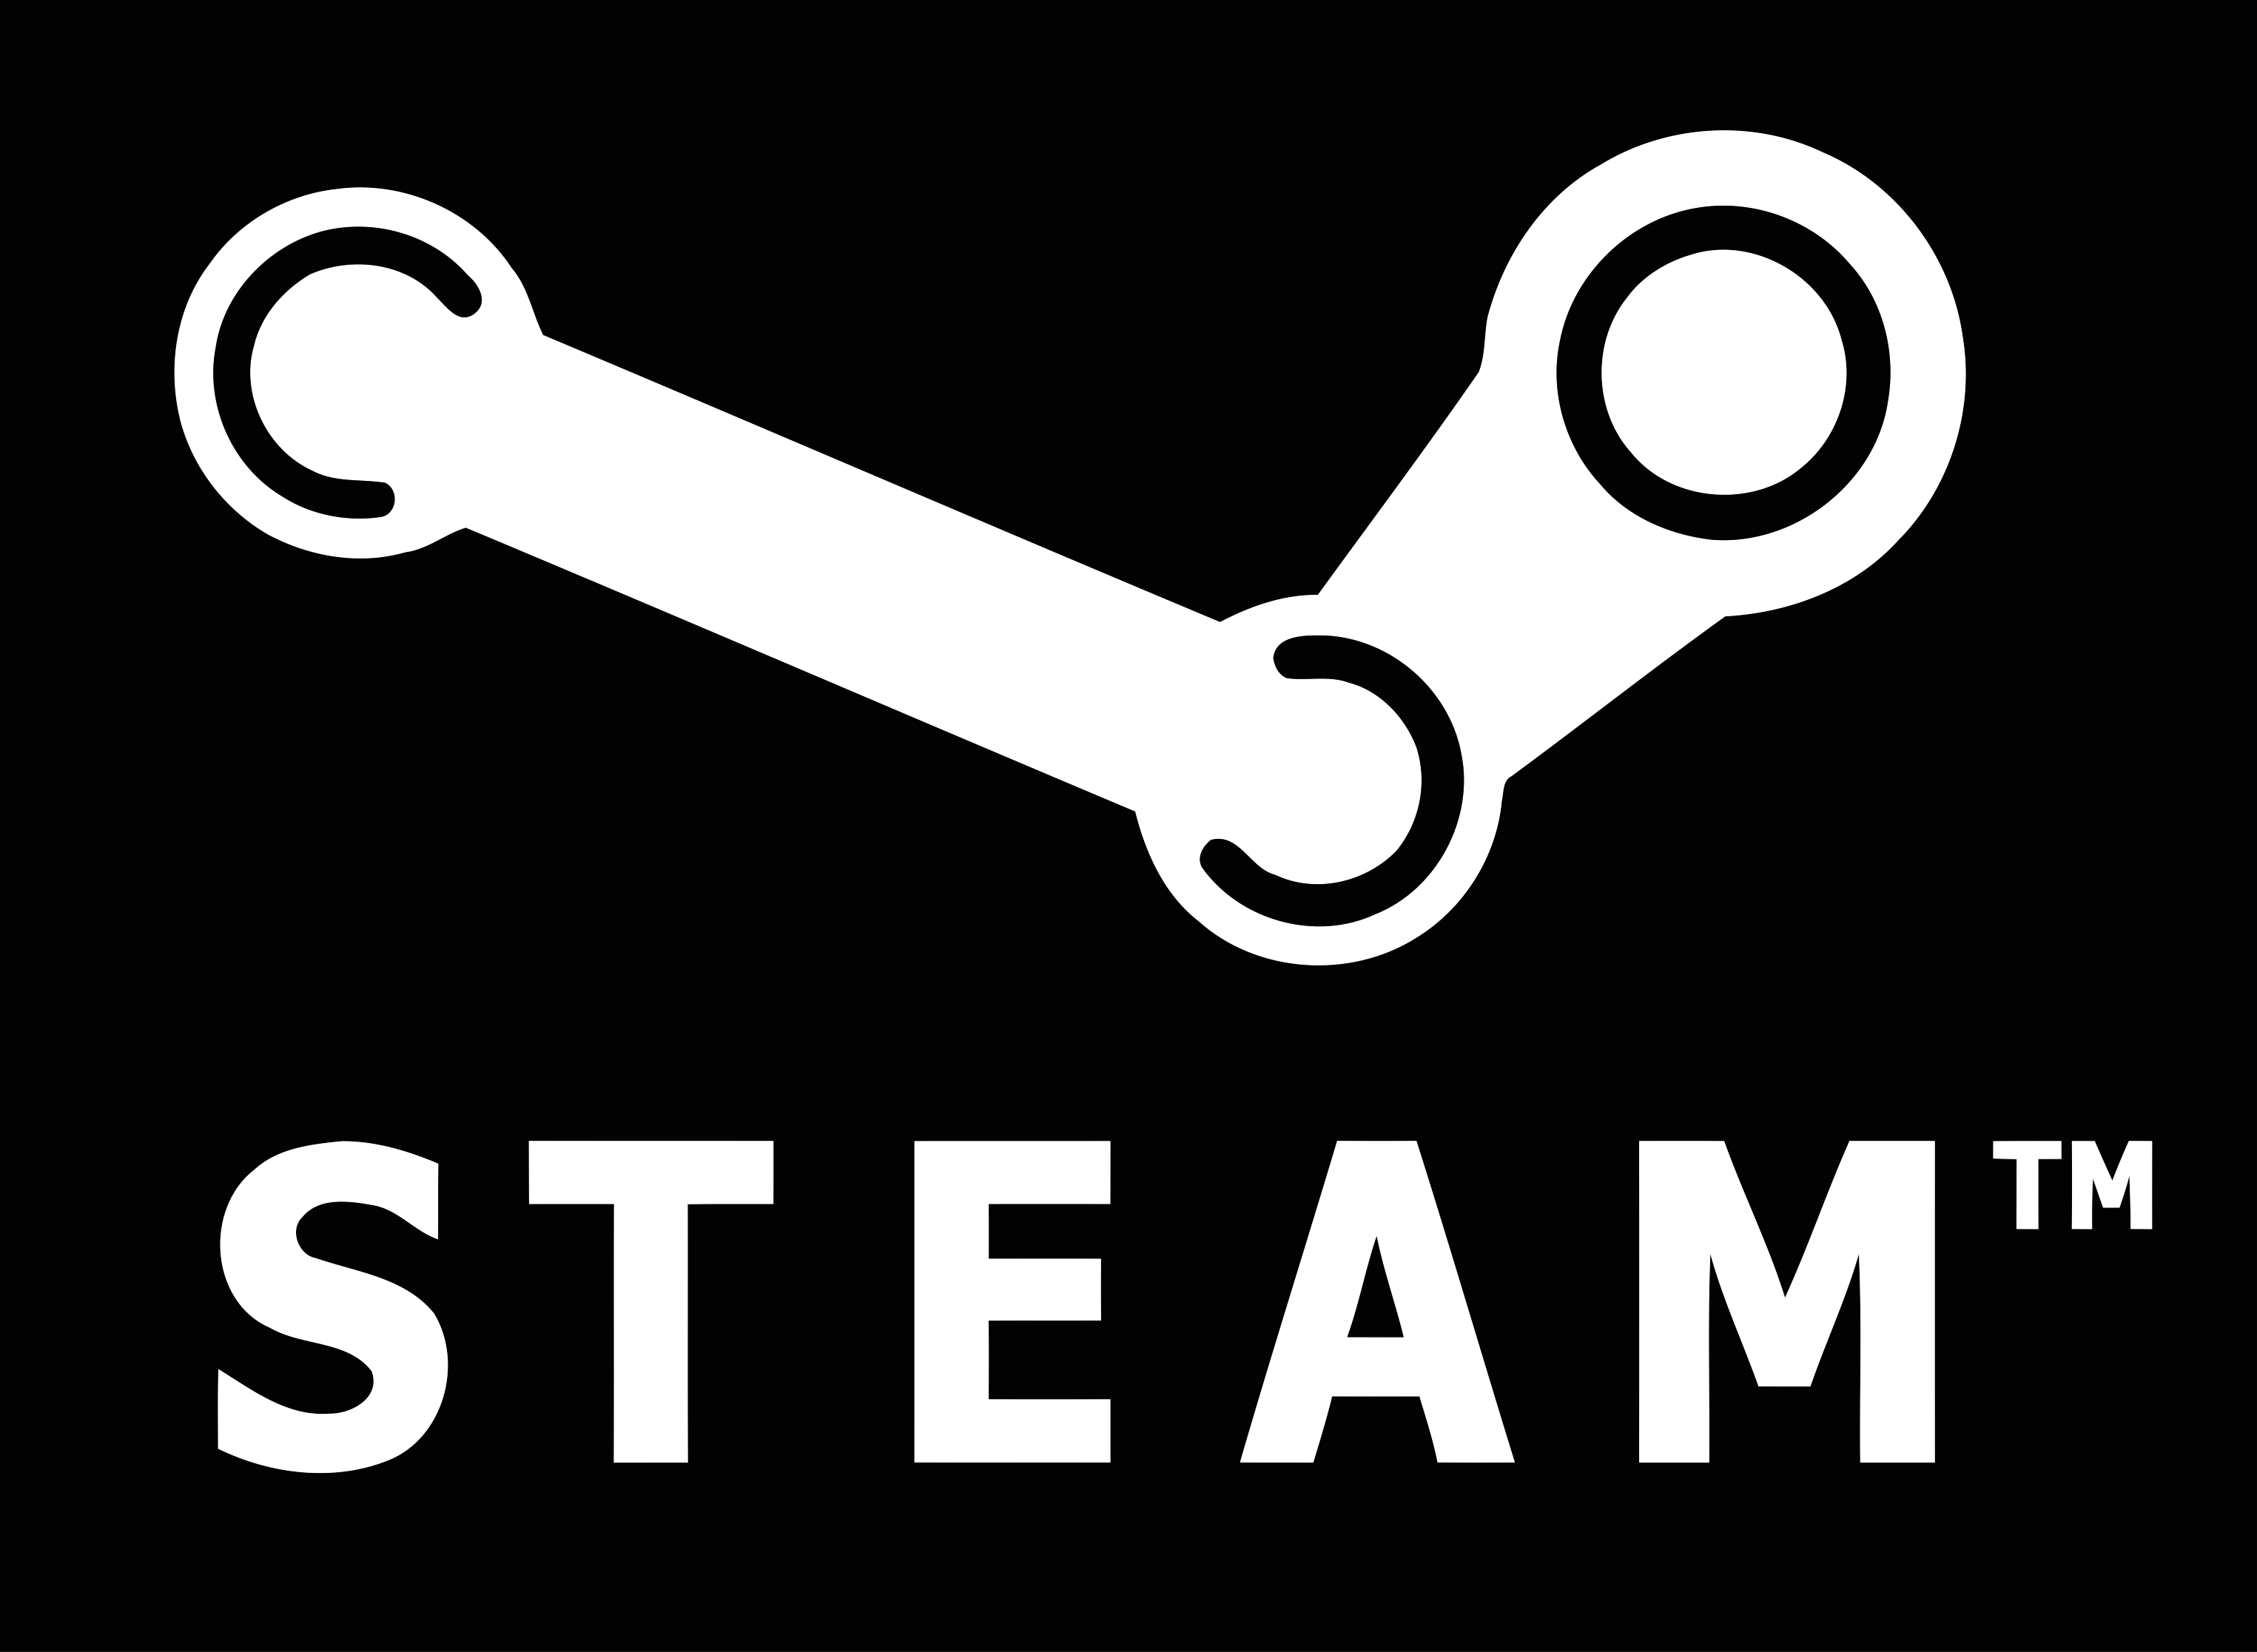 Fix: Steam Download Corrupt